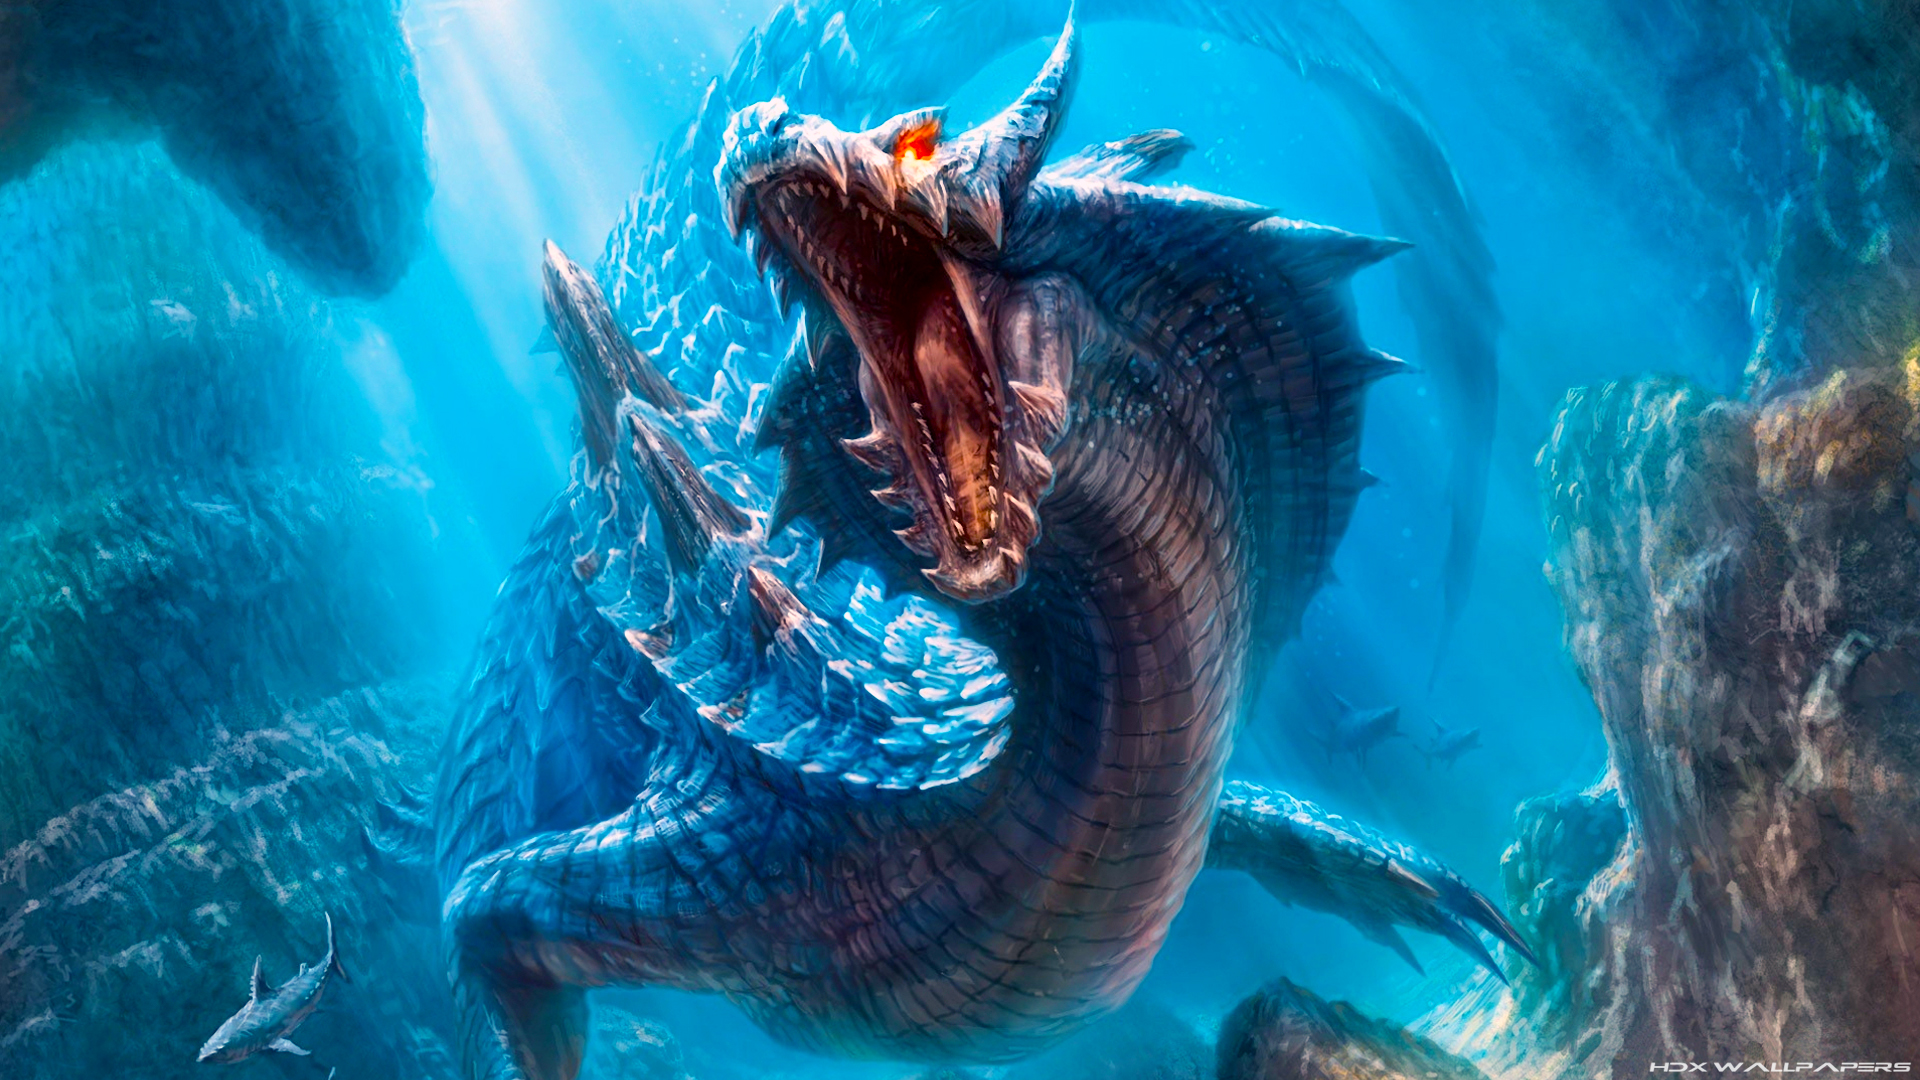 Fantasy Sea Monster 4K HD Wallpapers  HD Wallpapers  ID 32165